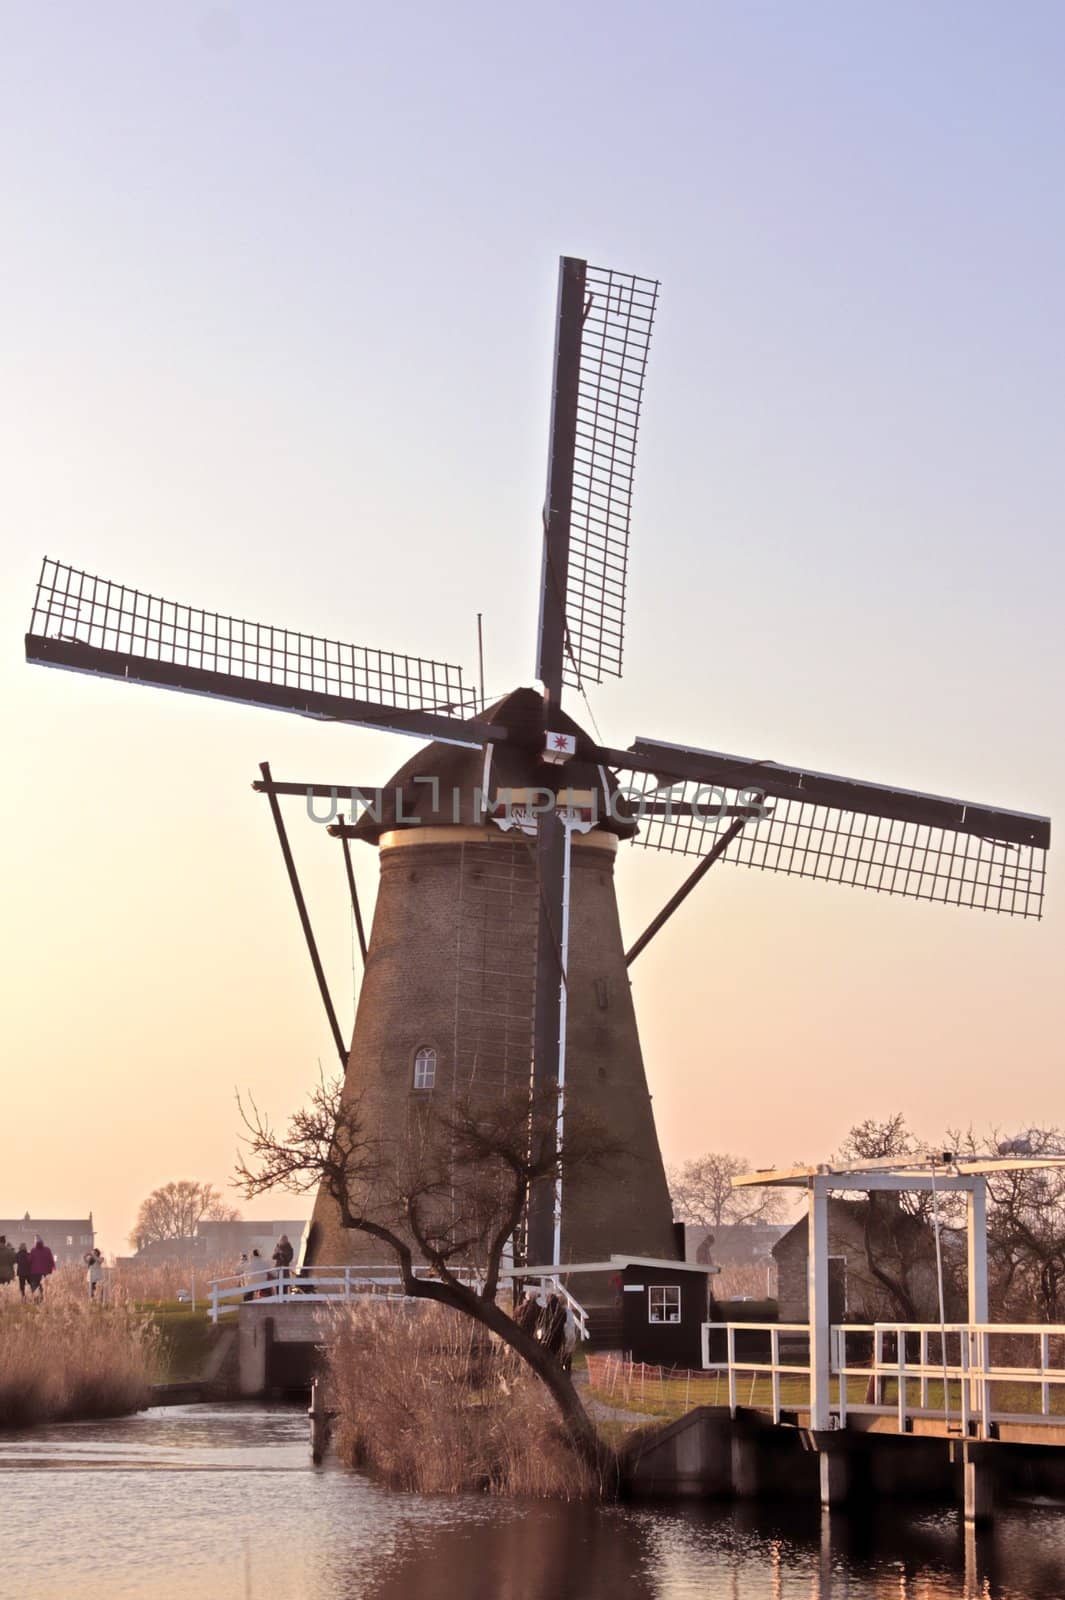 Windmills in wintertime at Kinderdijk in the Netherlands by devy